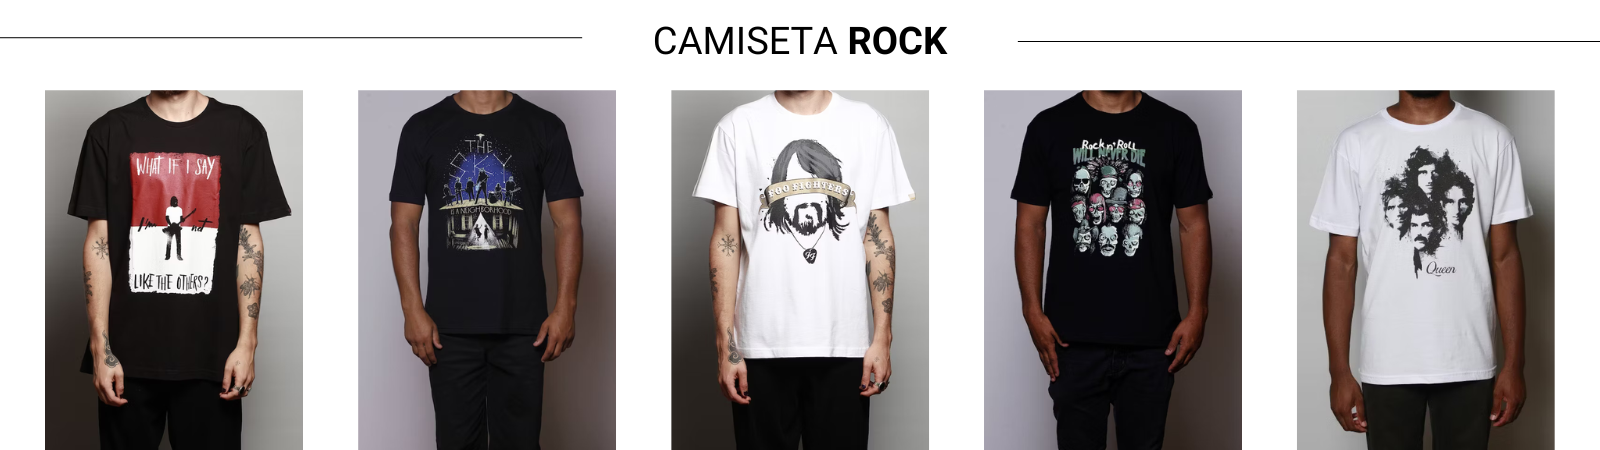 CAMISETA-ROCK